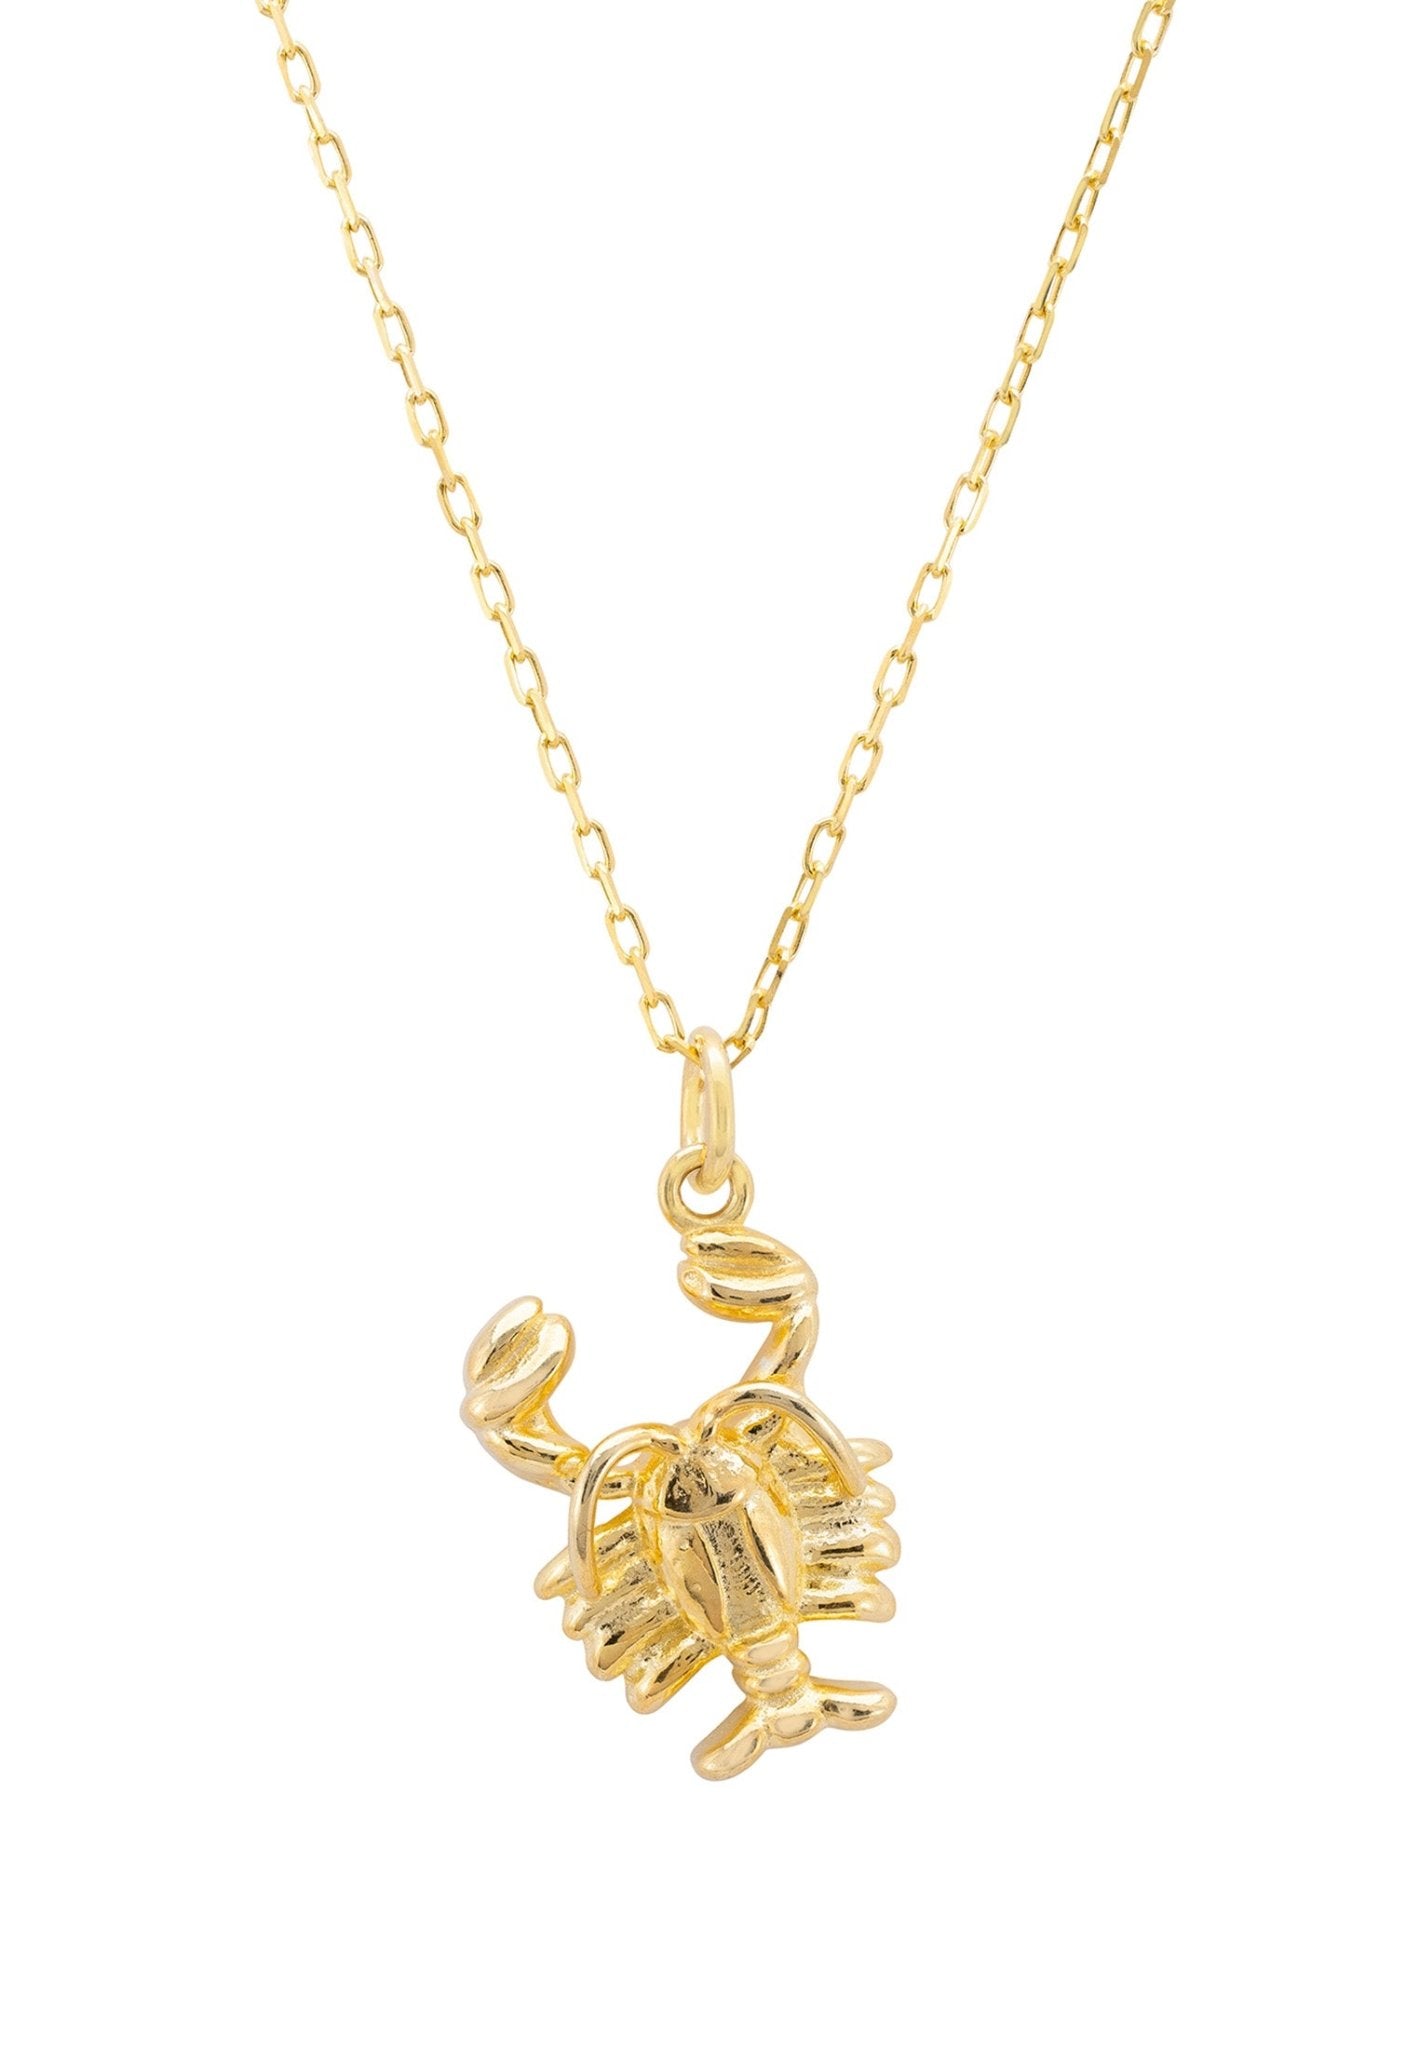 Personalized Necklaces - Zodiac Star Sign Necklace Gold Scorpio 